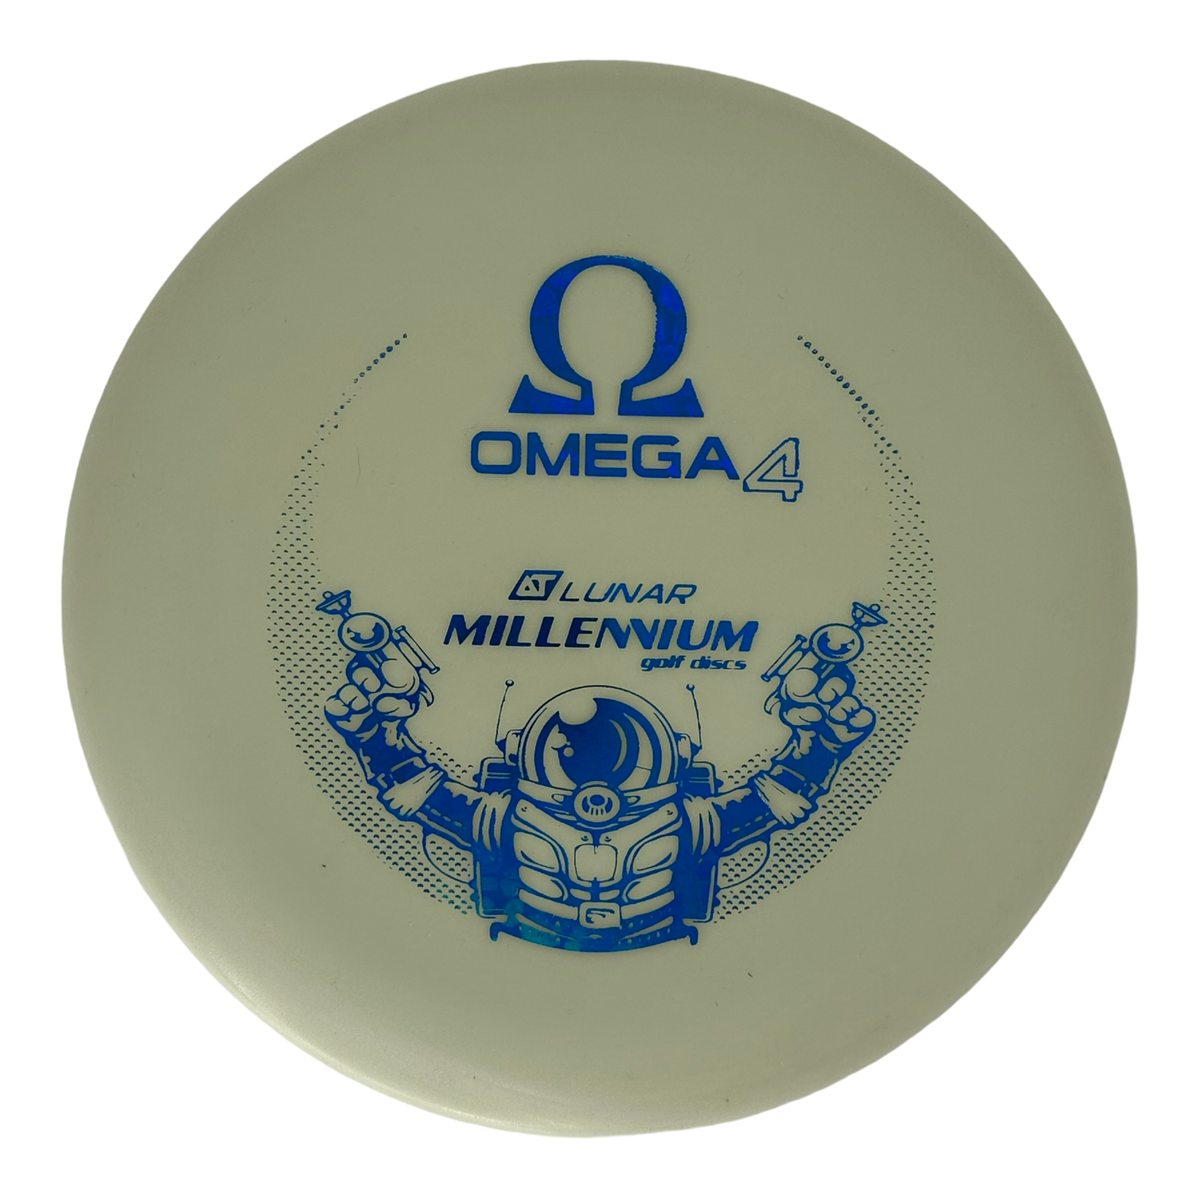 Millennium Delta-T Lunar Omega 4 - First Contact